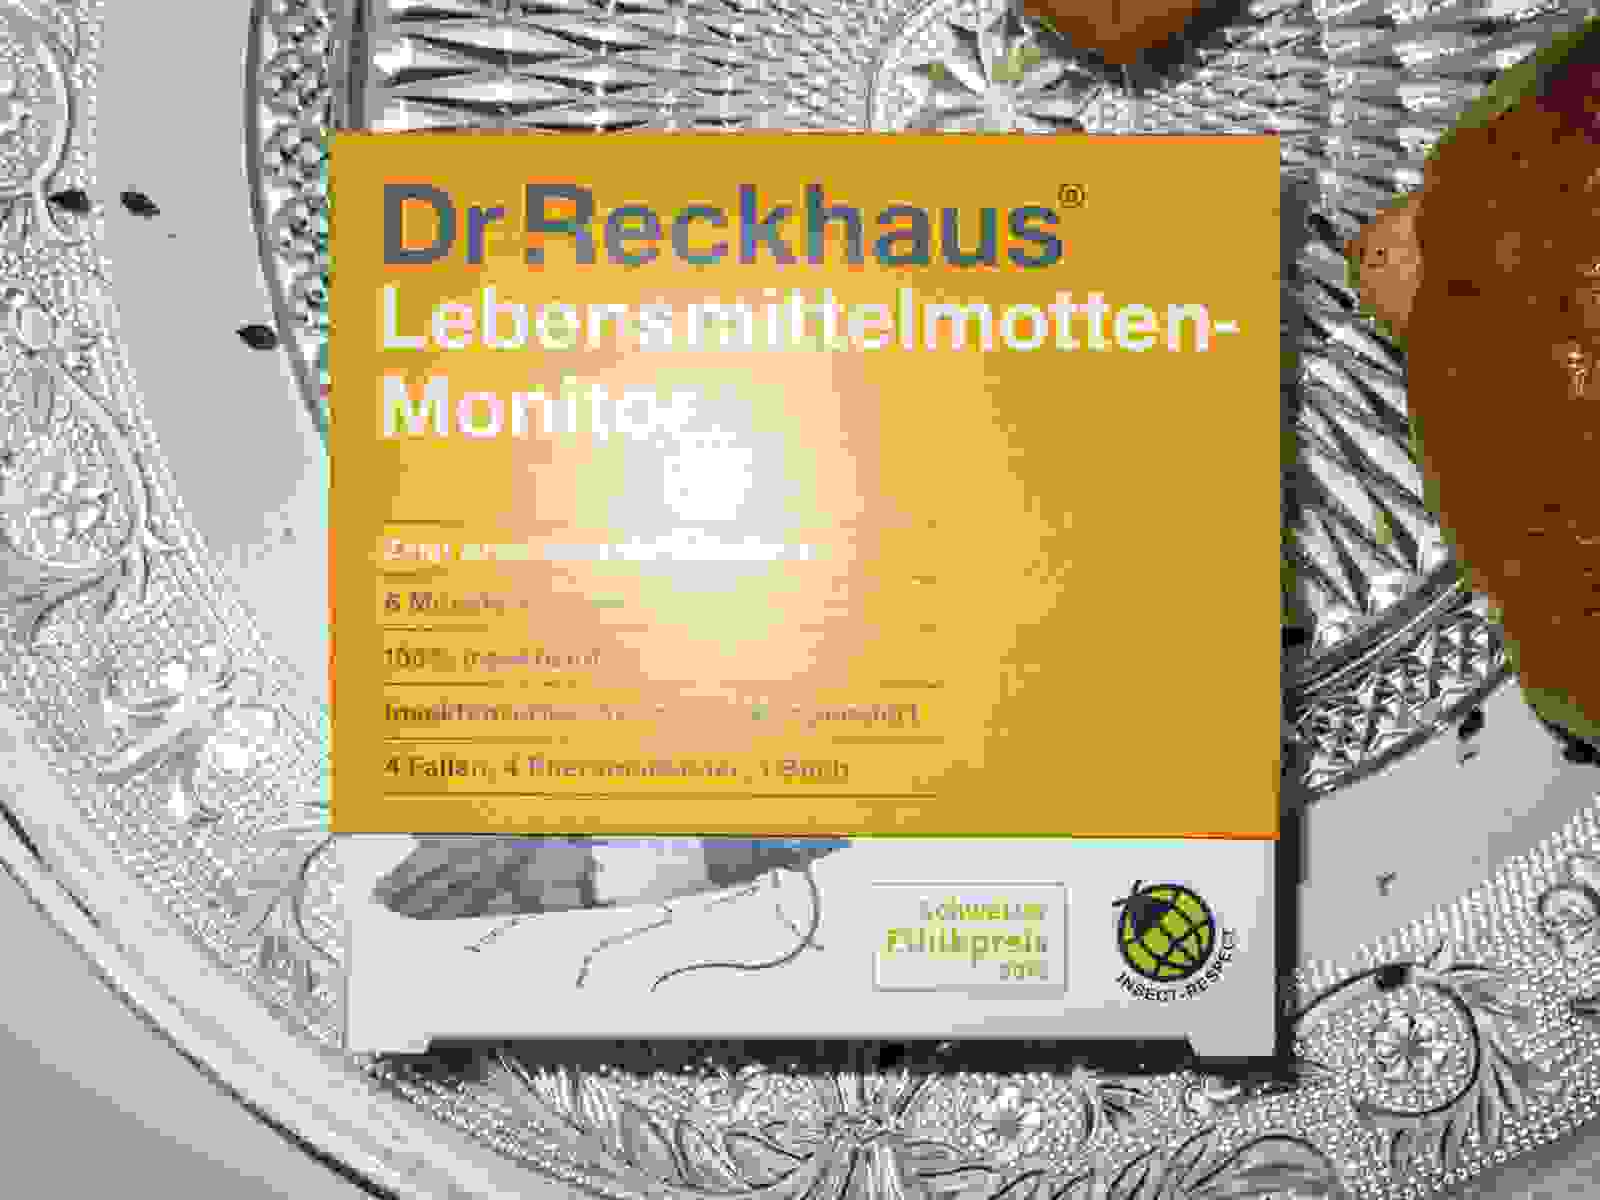 Verpackung Dr.Reckhaus und Gewinn Red Dot Award